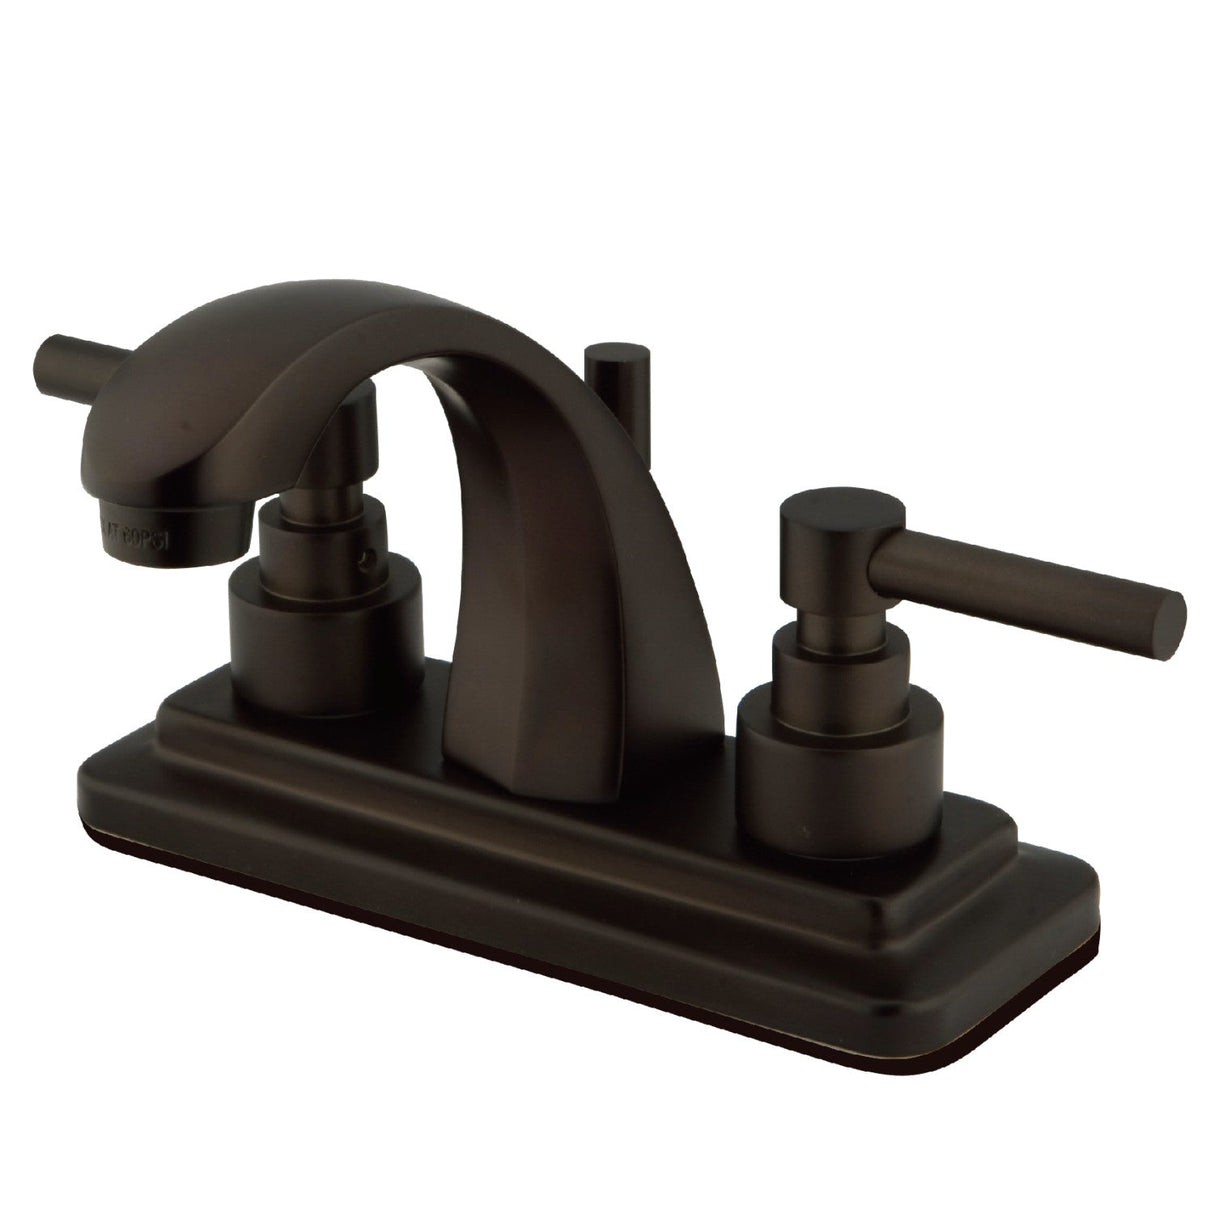 Elinvar KS4645EL Two-Handle 3-Hole Deck Mount 4" Centerset Bathroom Faucet with Brass Pop-Up, Oil Rubbed Bronze